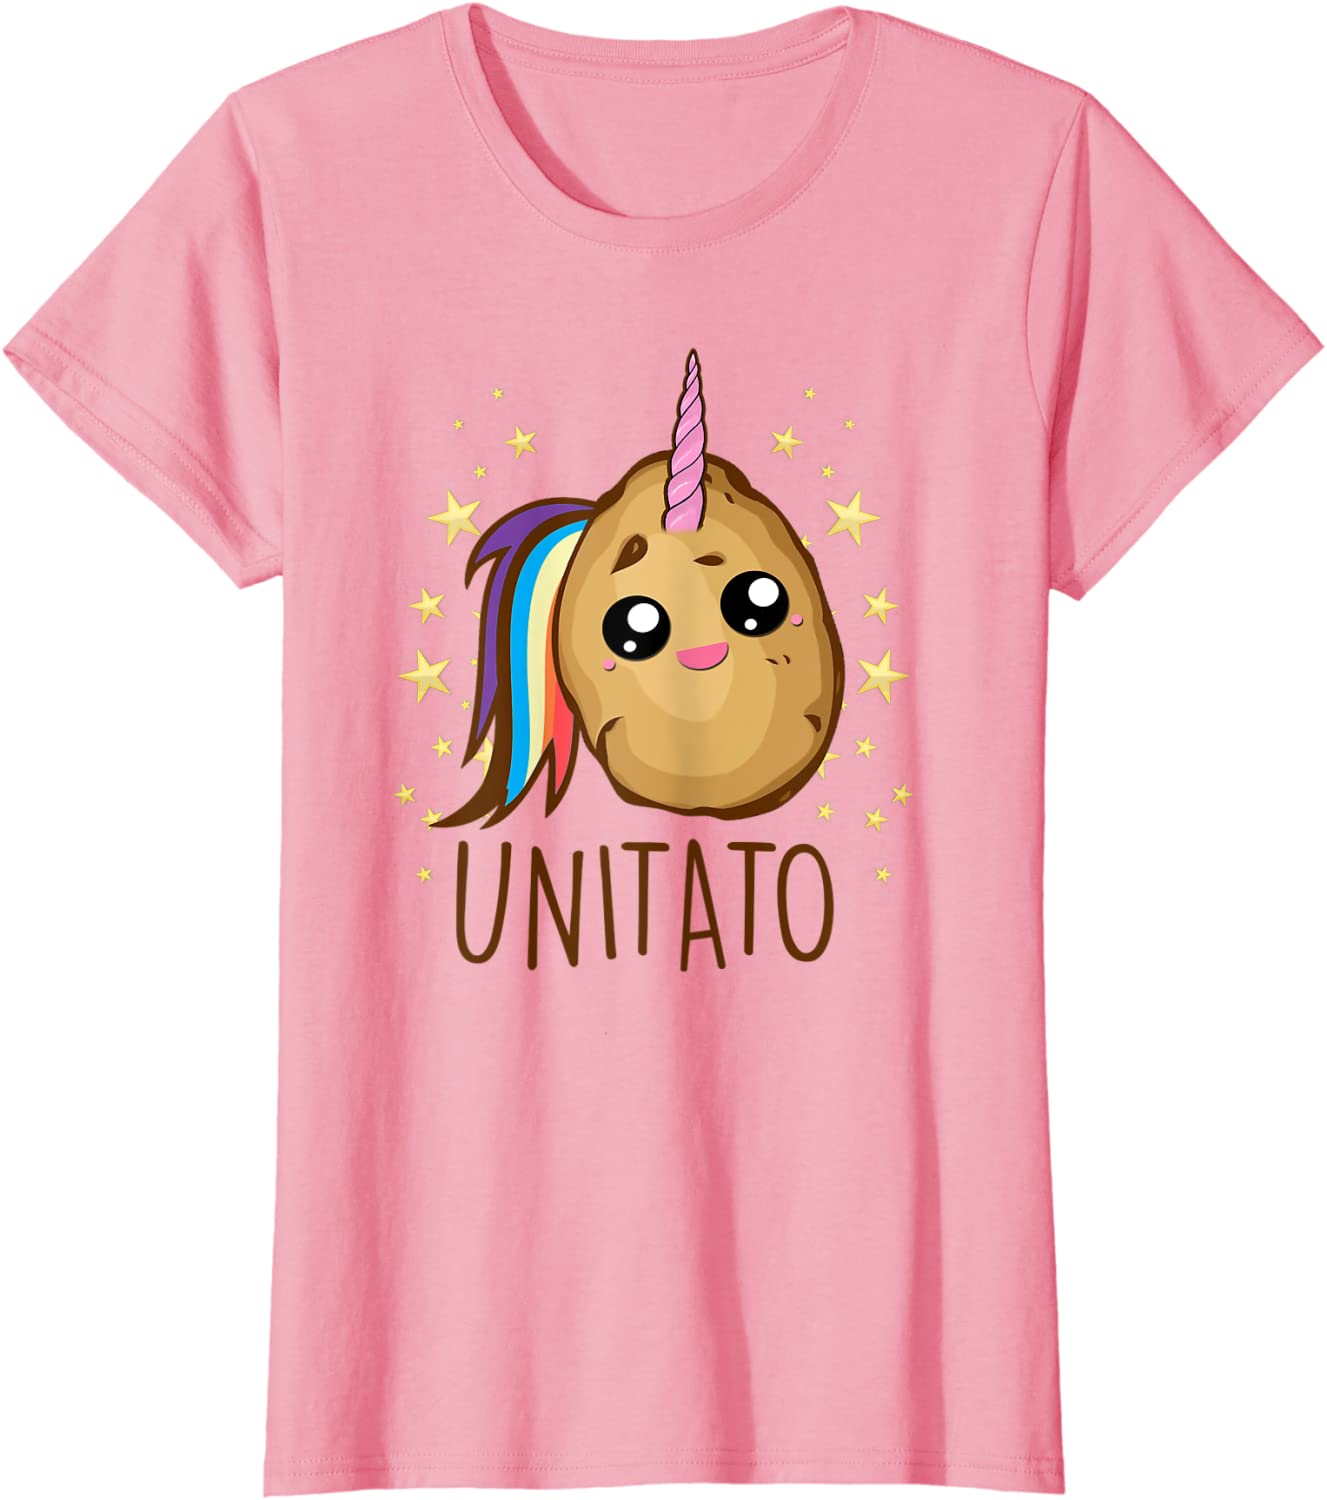 Funny Potato Unicorn Shirt